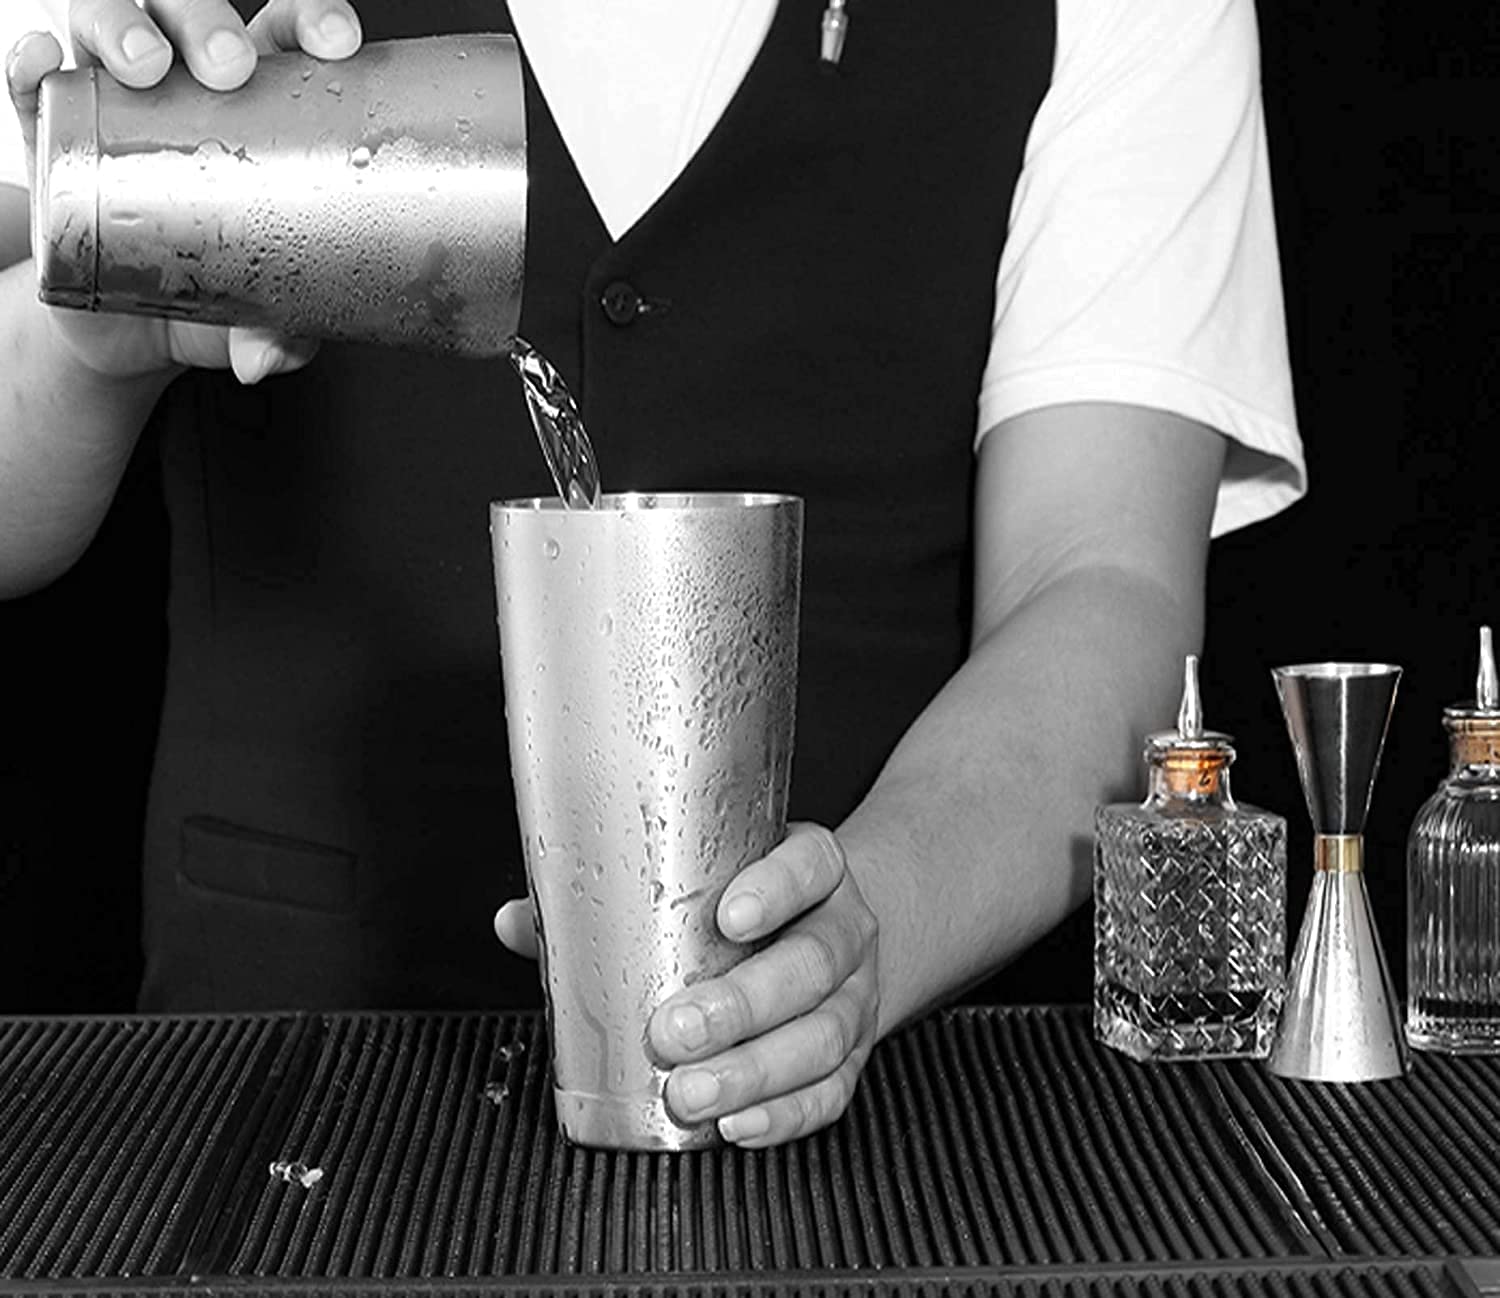 NJ Boston Cocktail Shaker, Cocktail Shaker Boston Mixing Tin Bartender Tool , Stainless Steel Shaker Bar Set for Parties, Boston Shaking Shaker Sets 540 ml and 900 ml : 20 Pcs Set